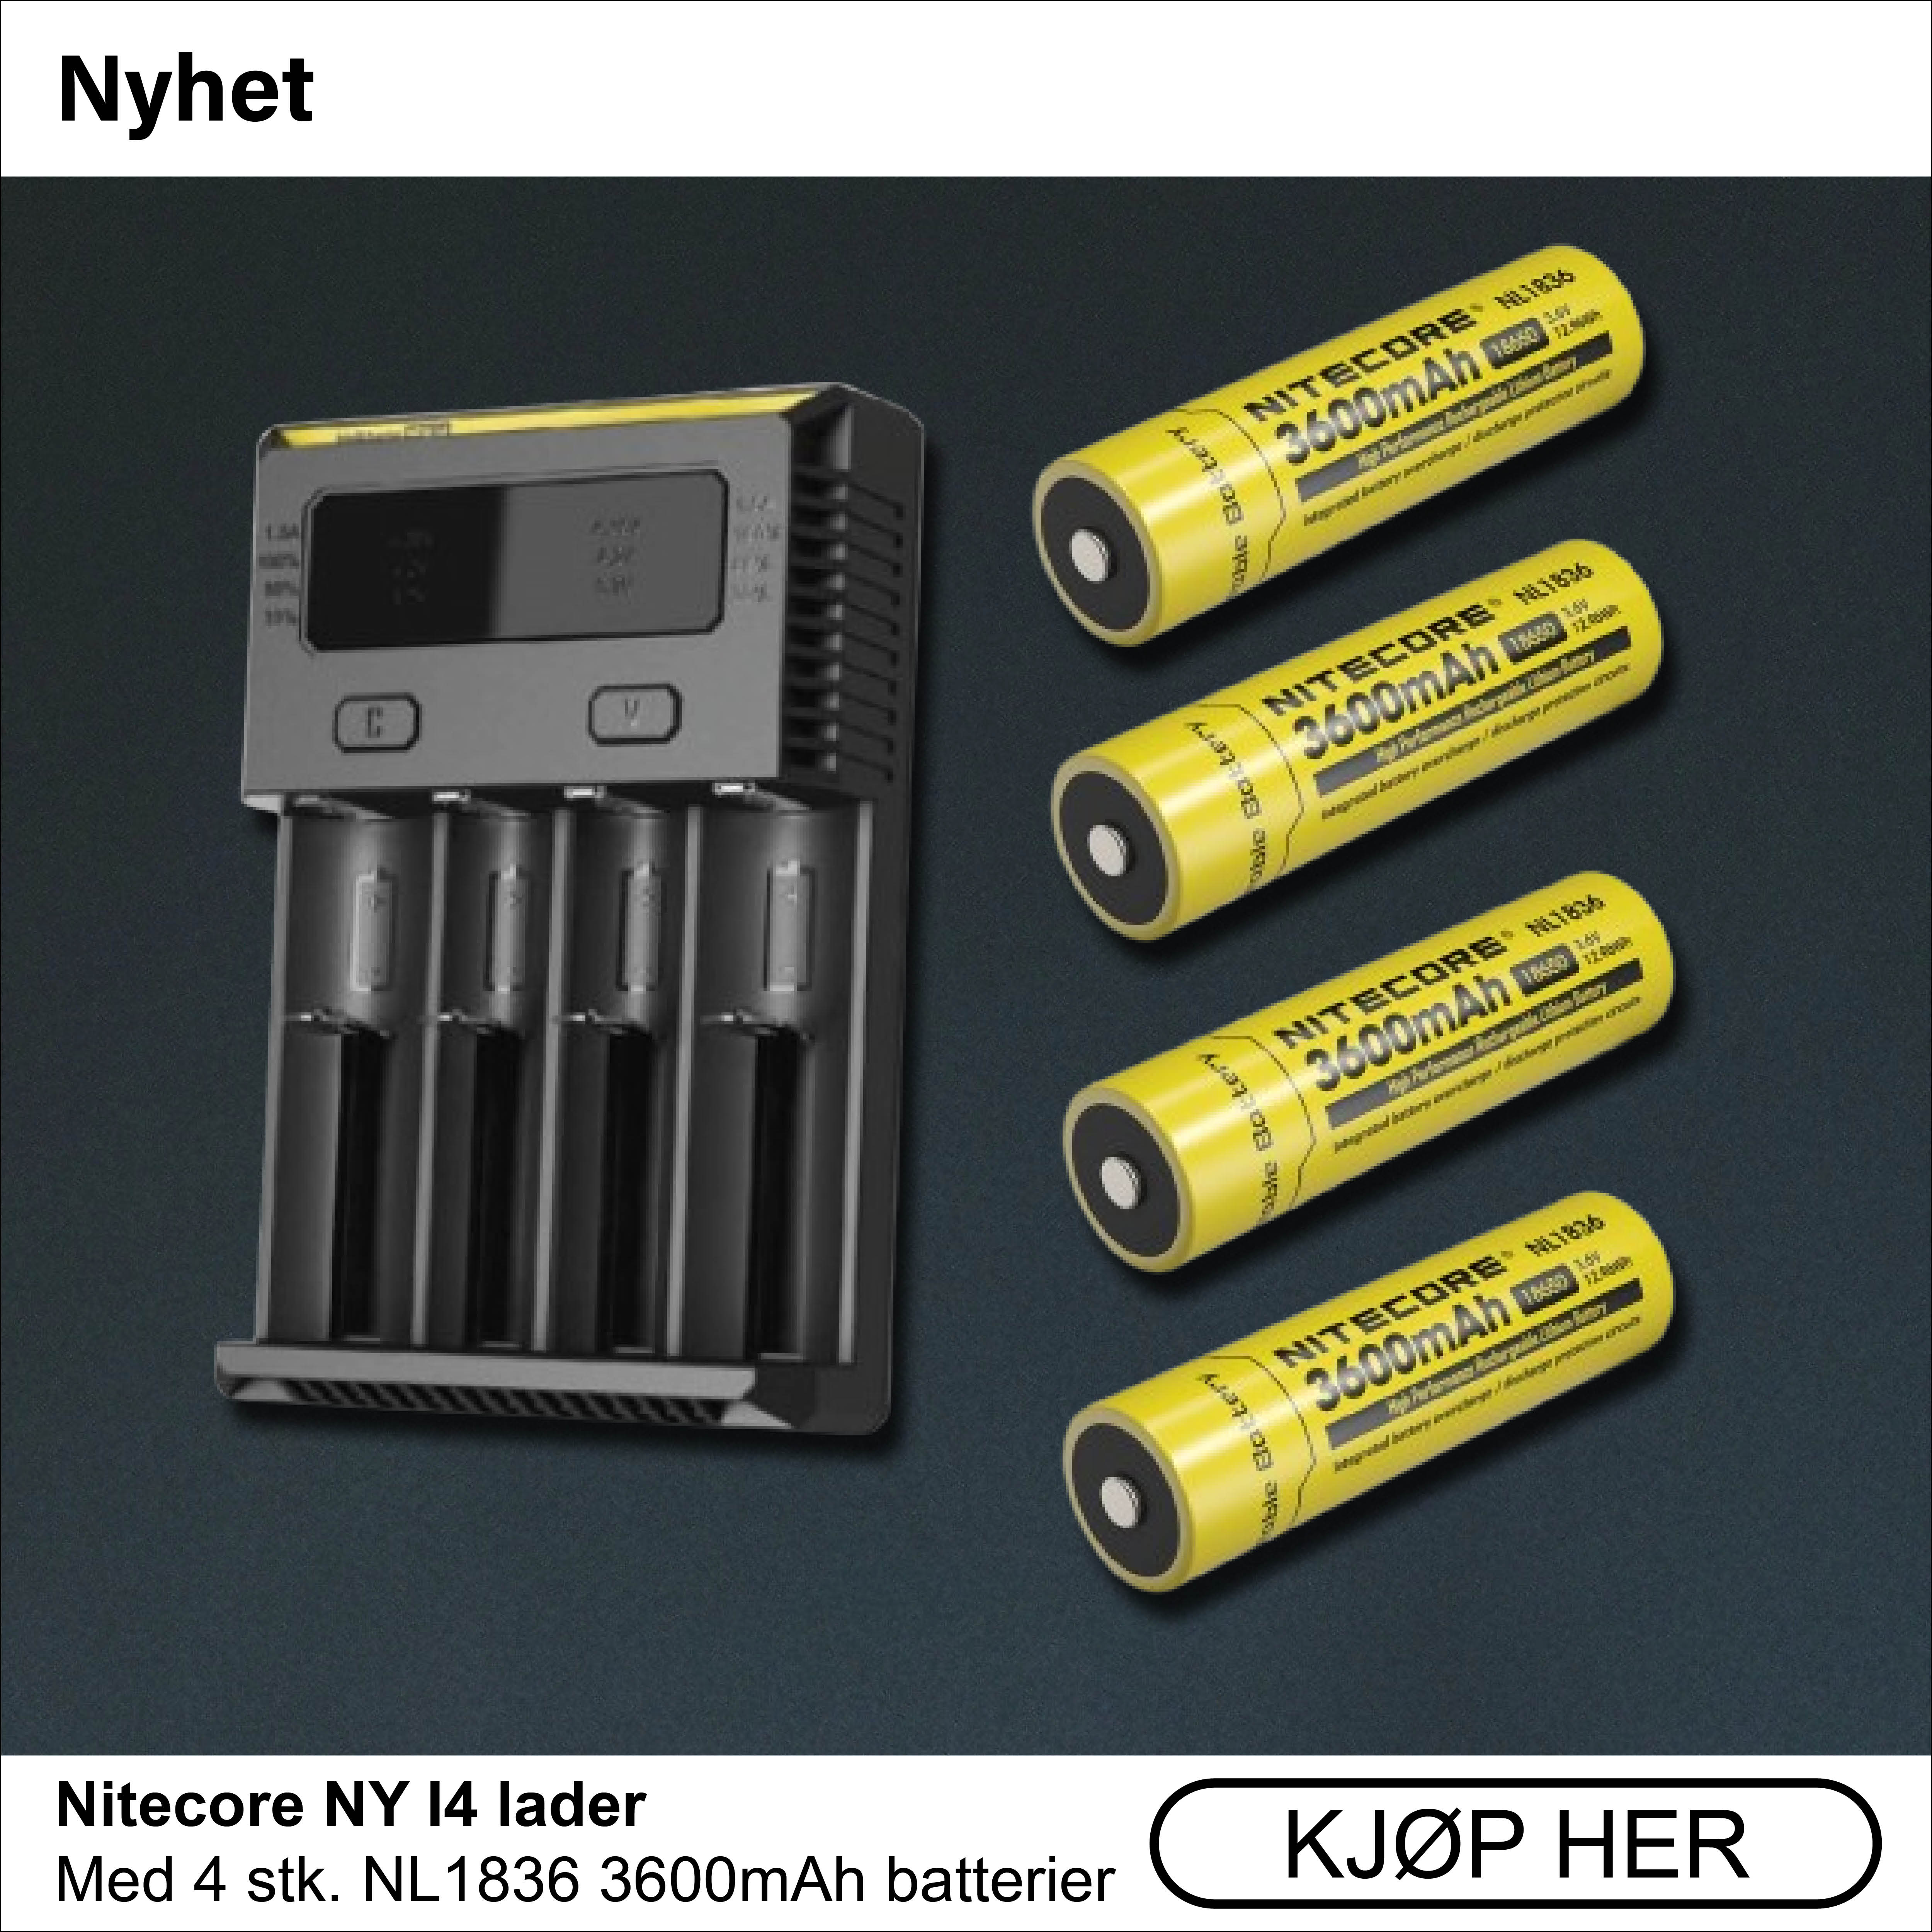 Nitecore NY I4 lader med 4 stk. Nitecore NL1836 3600mAh batterier